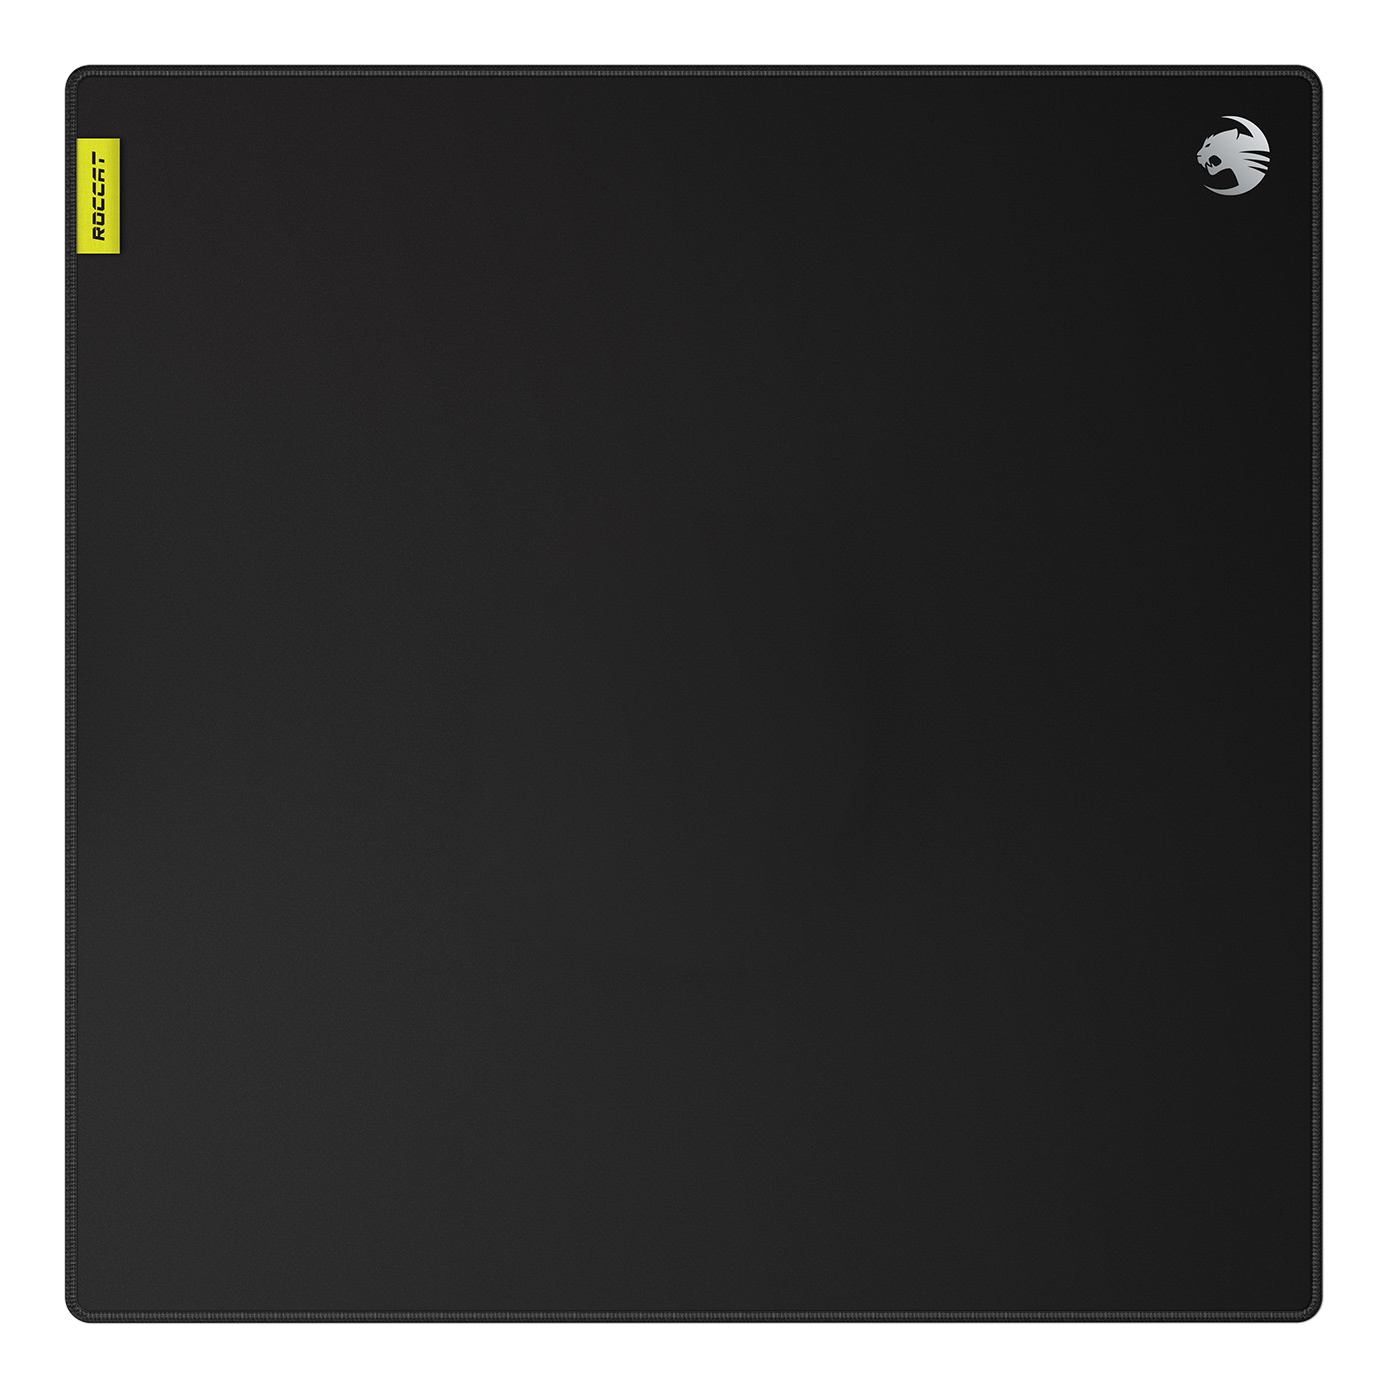 ROCCAT Sense CTRL quadrato - Mouse pad per gaming (Nero)